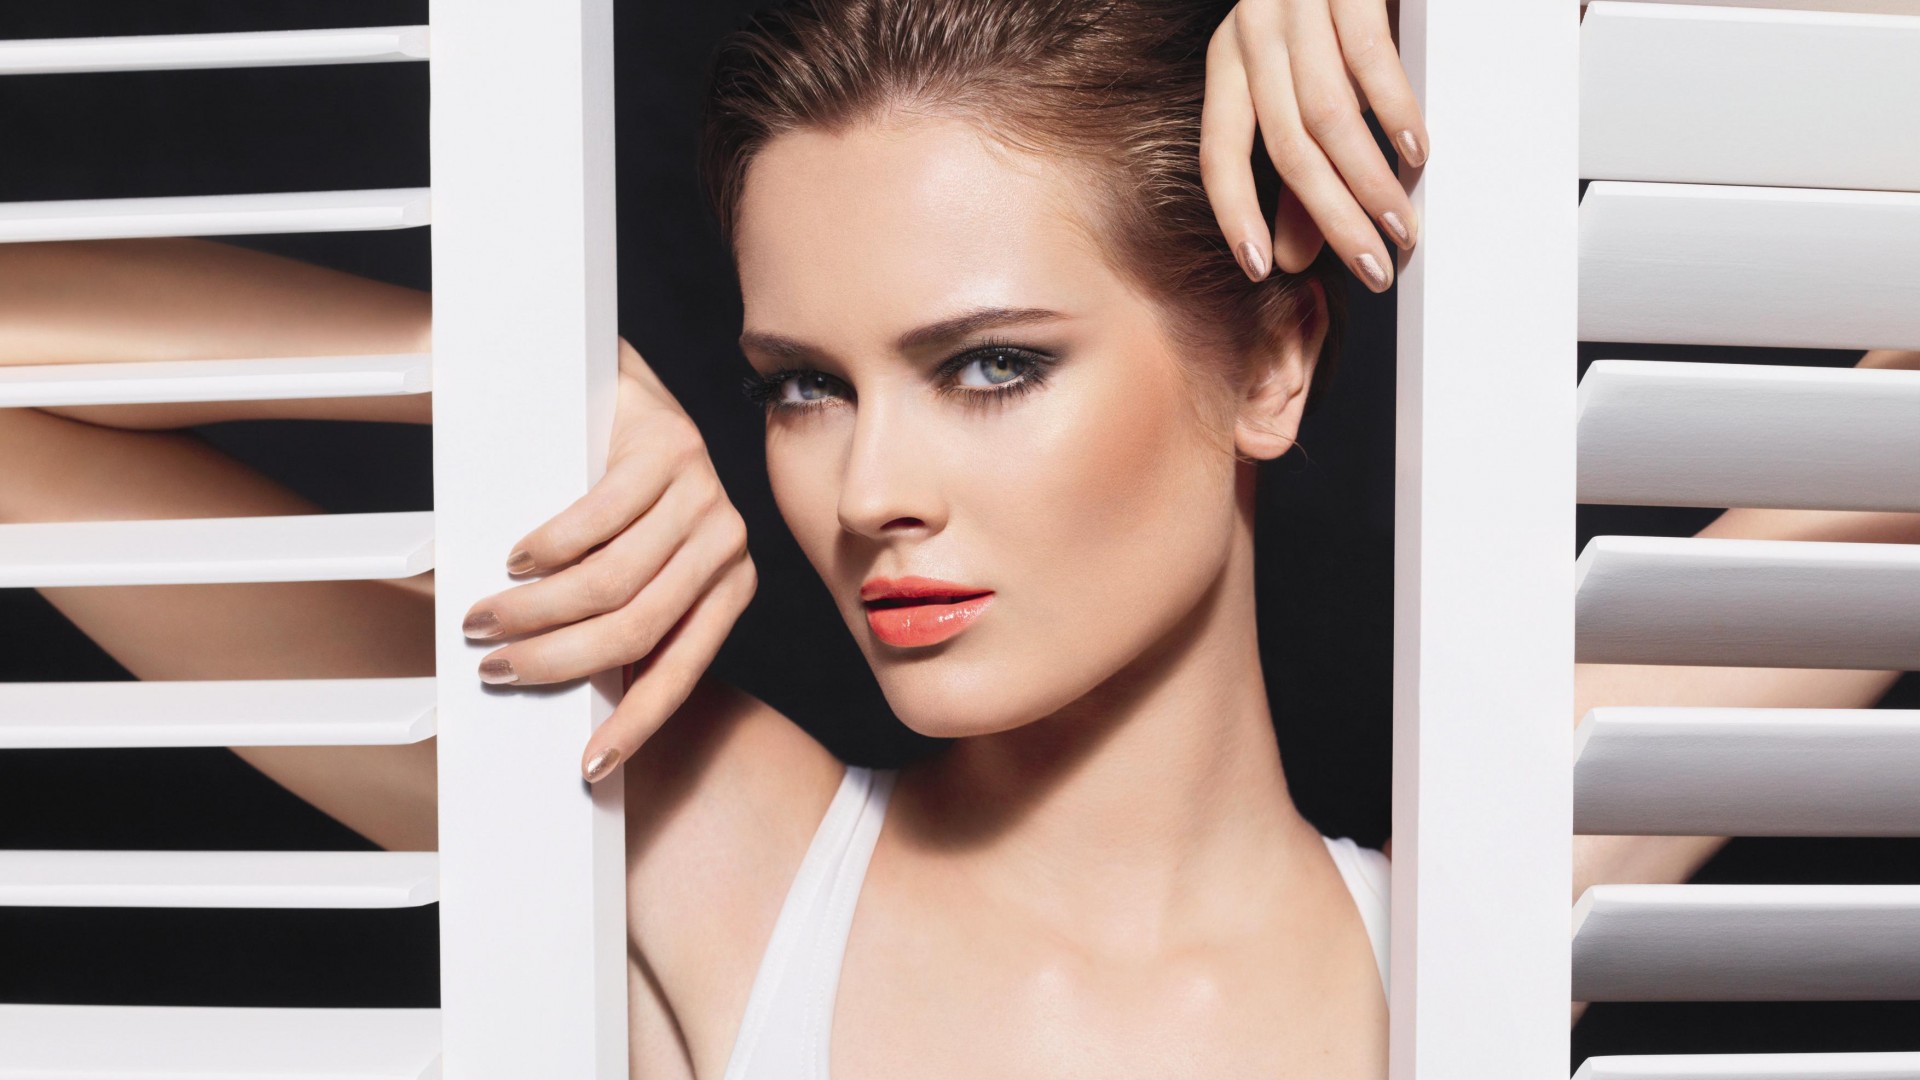 Monika Jagaciak, Top Fashion Models 2015, model, look, brunette (horizontal)